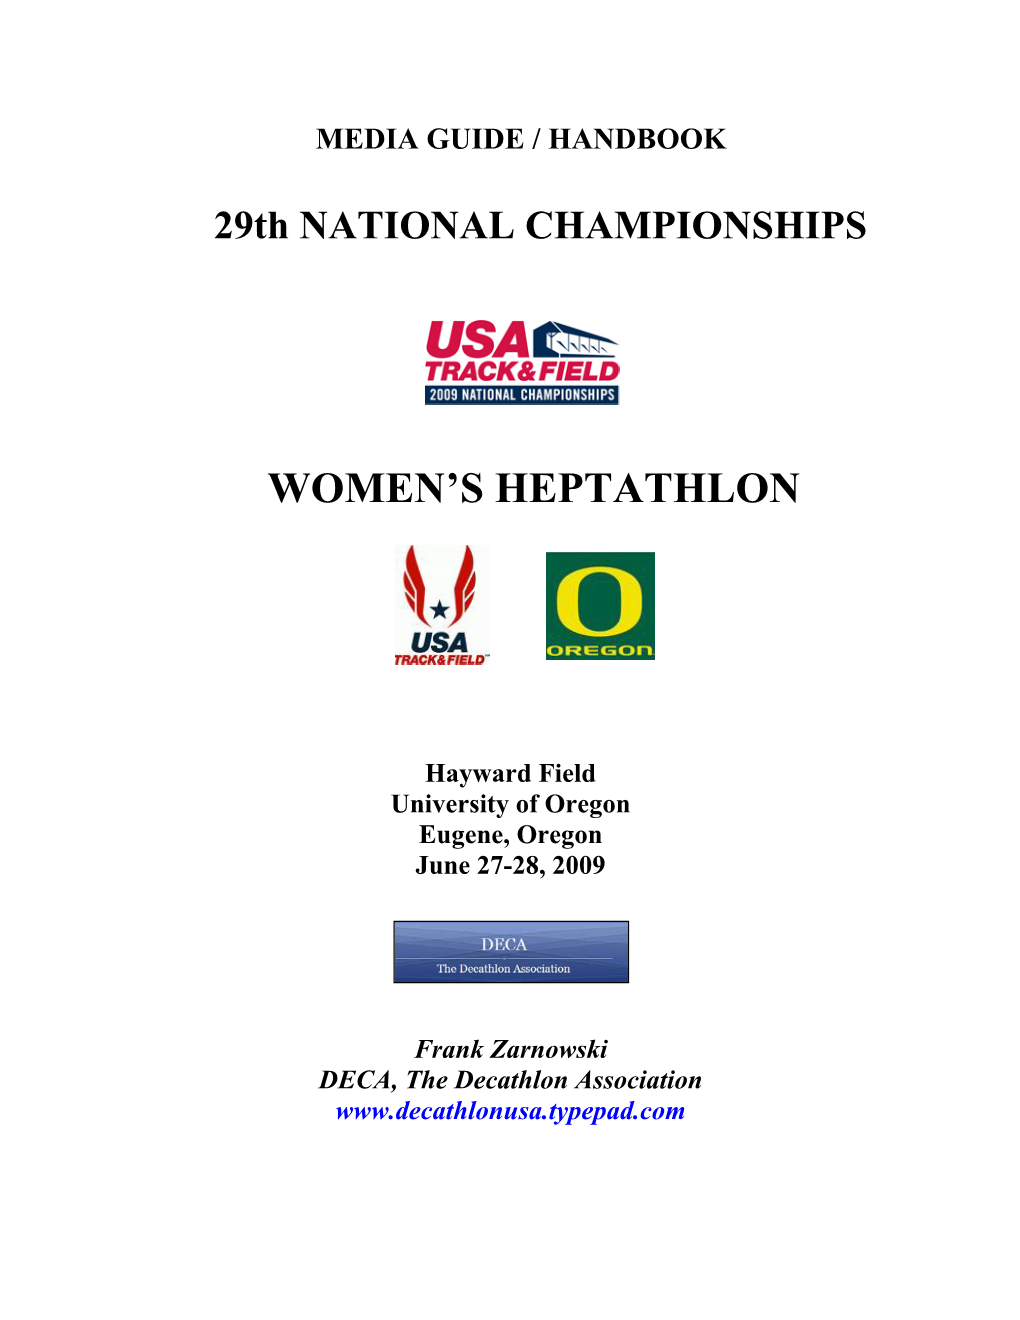 Women's Heptathlon